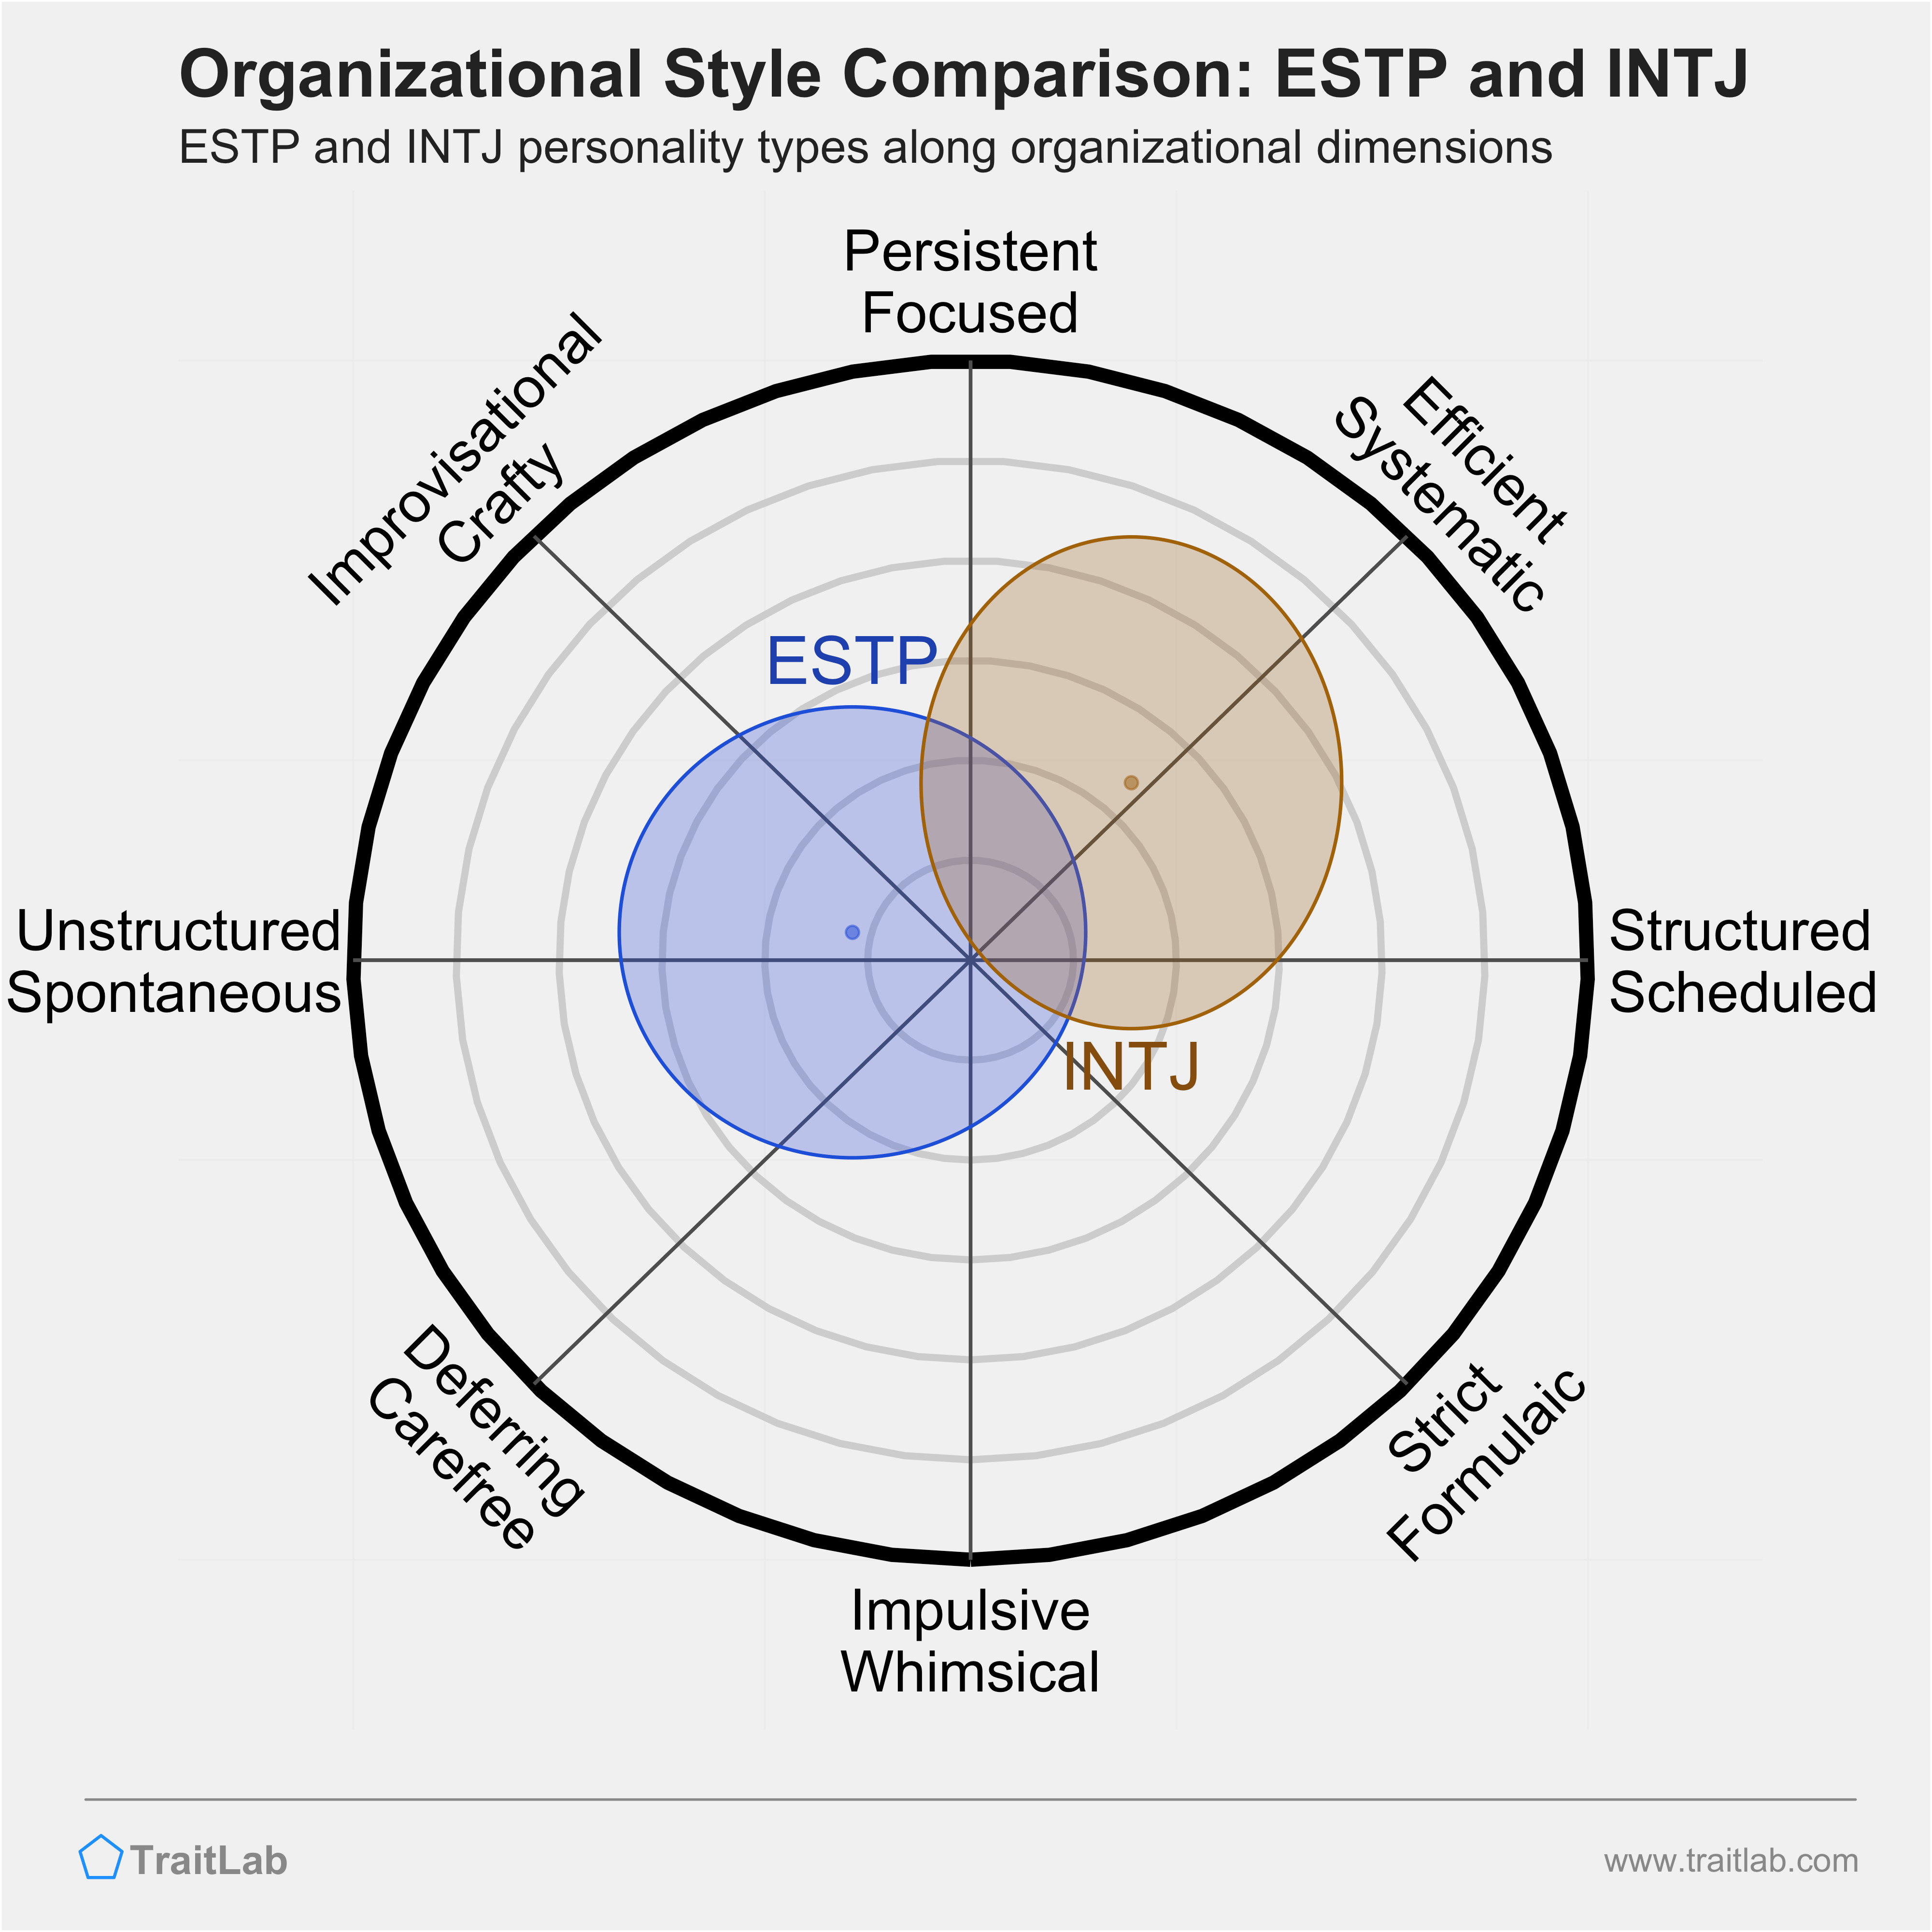 ESTP and INTJ comparison across organizational dimensions